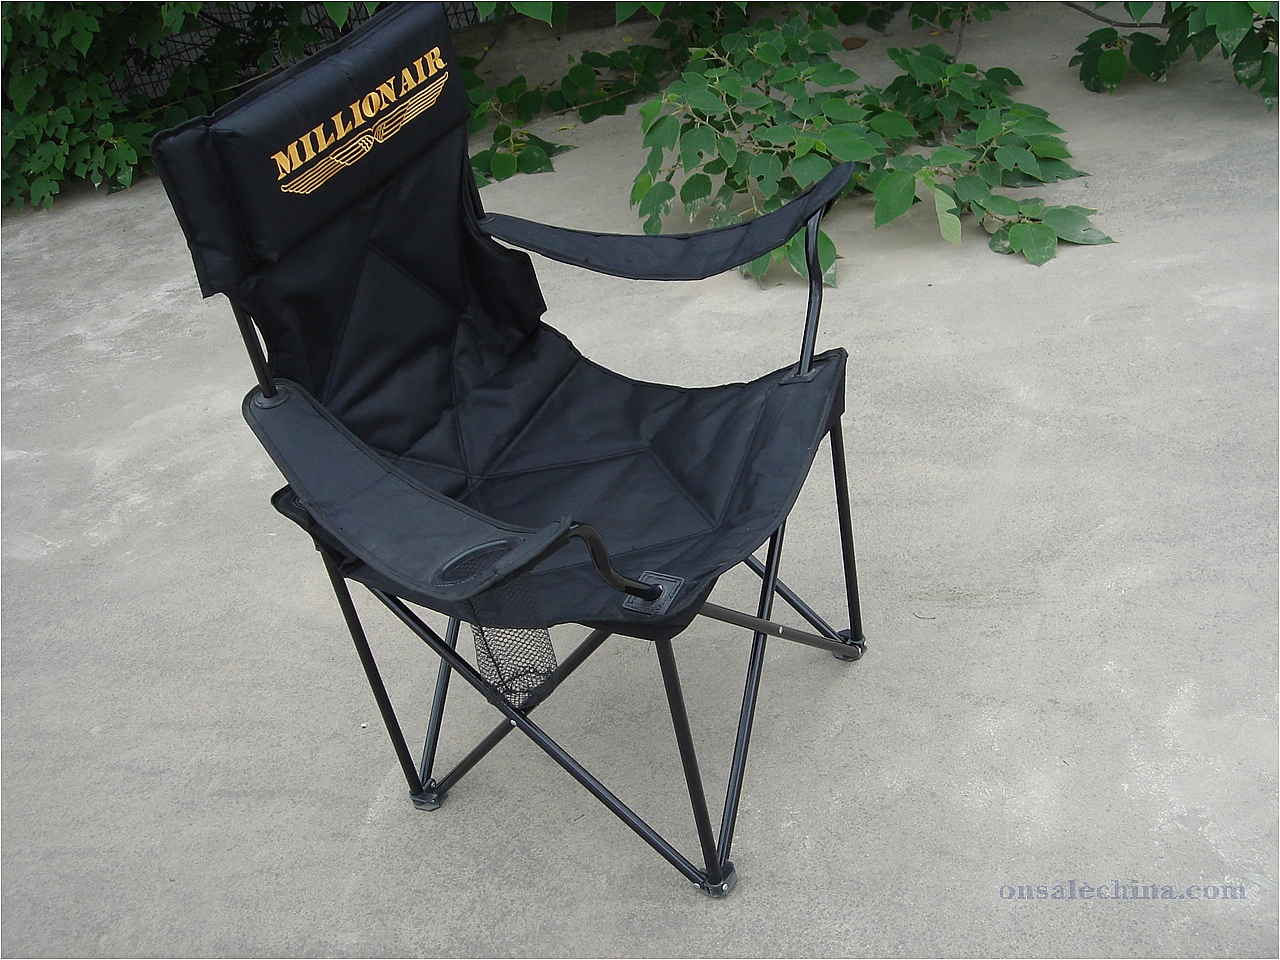 Foldabler beach chair